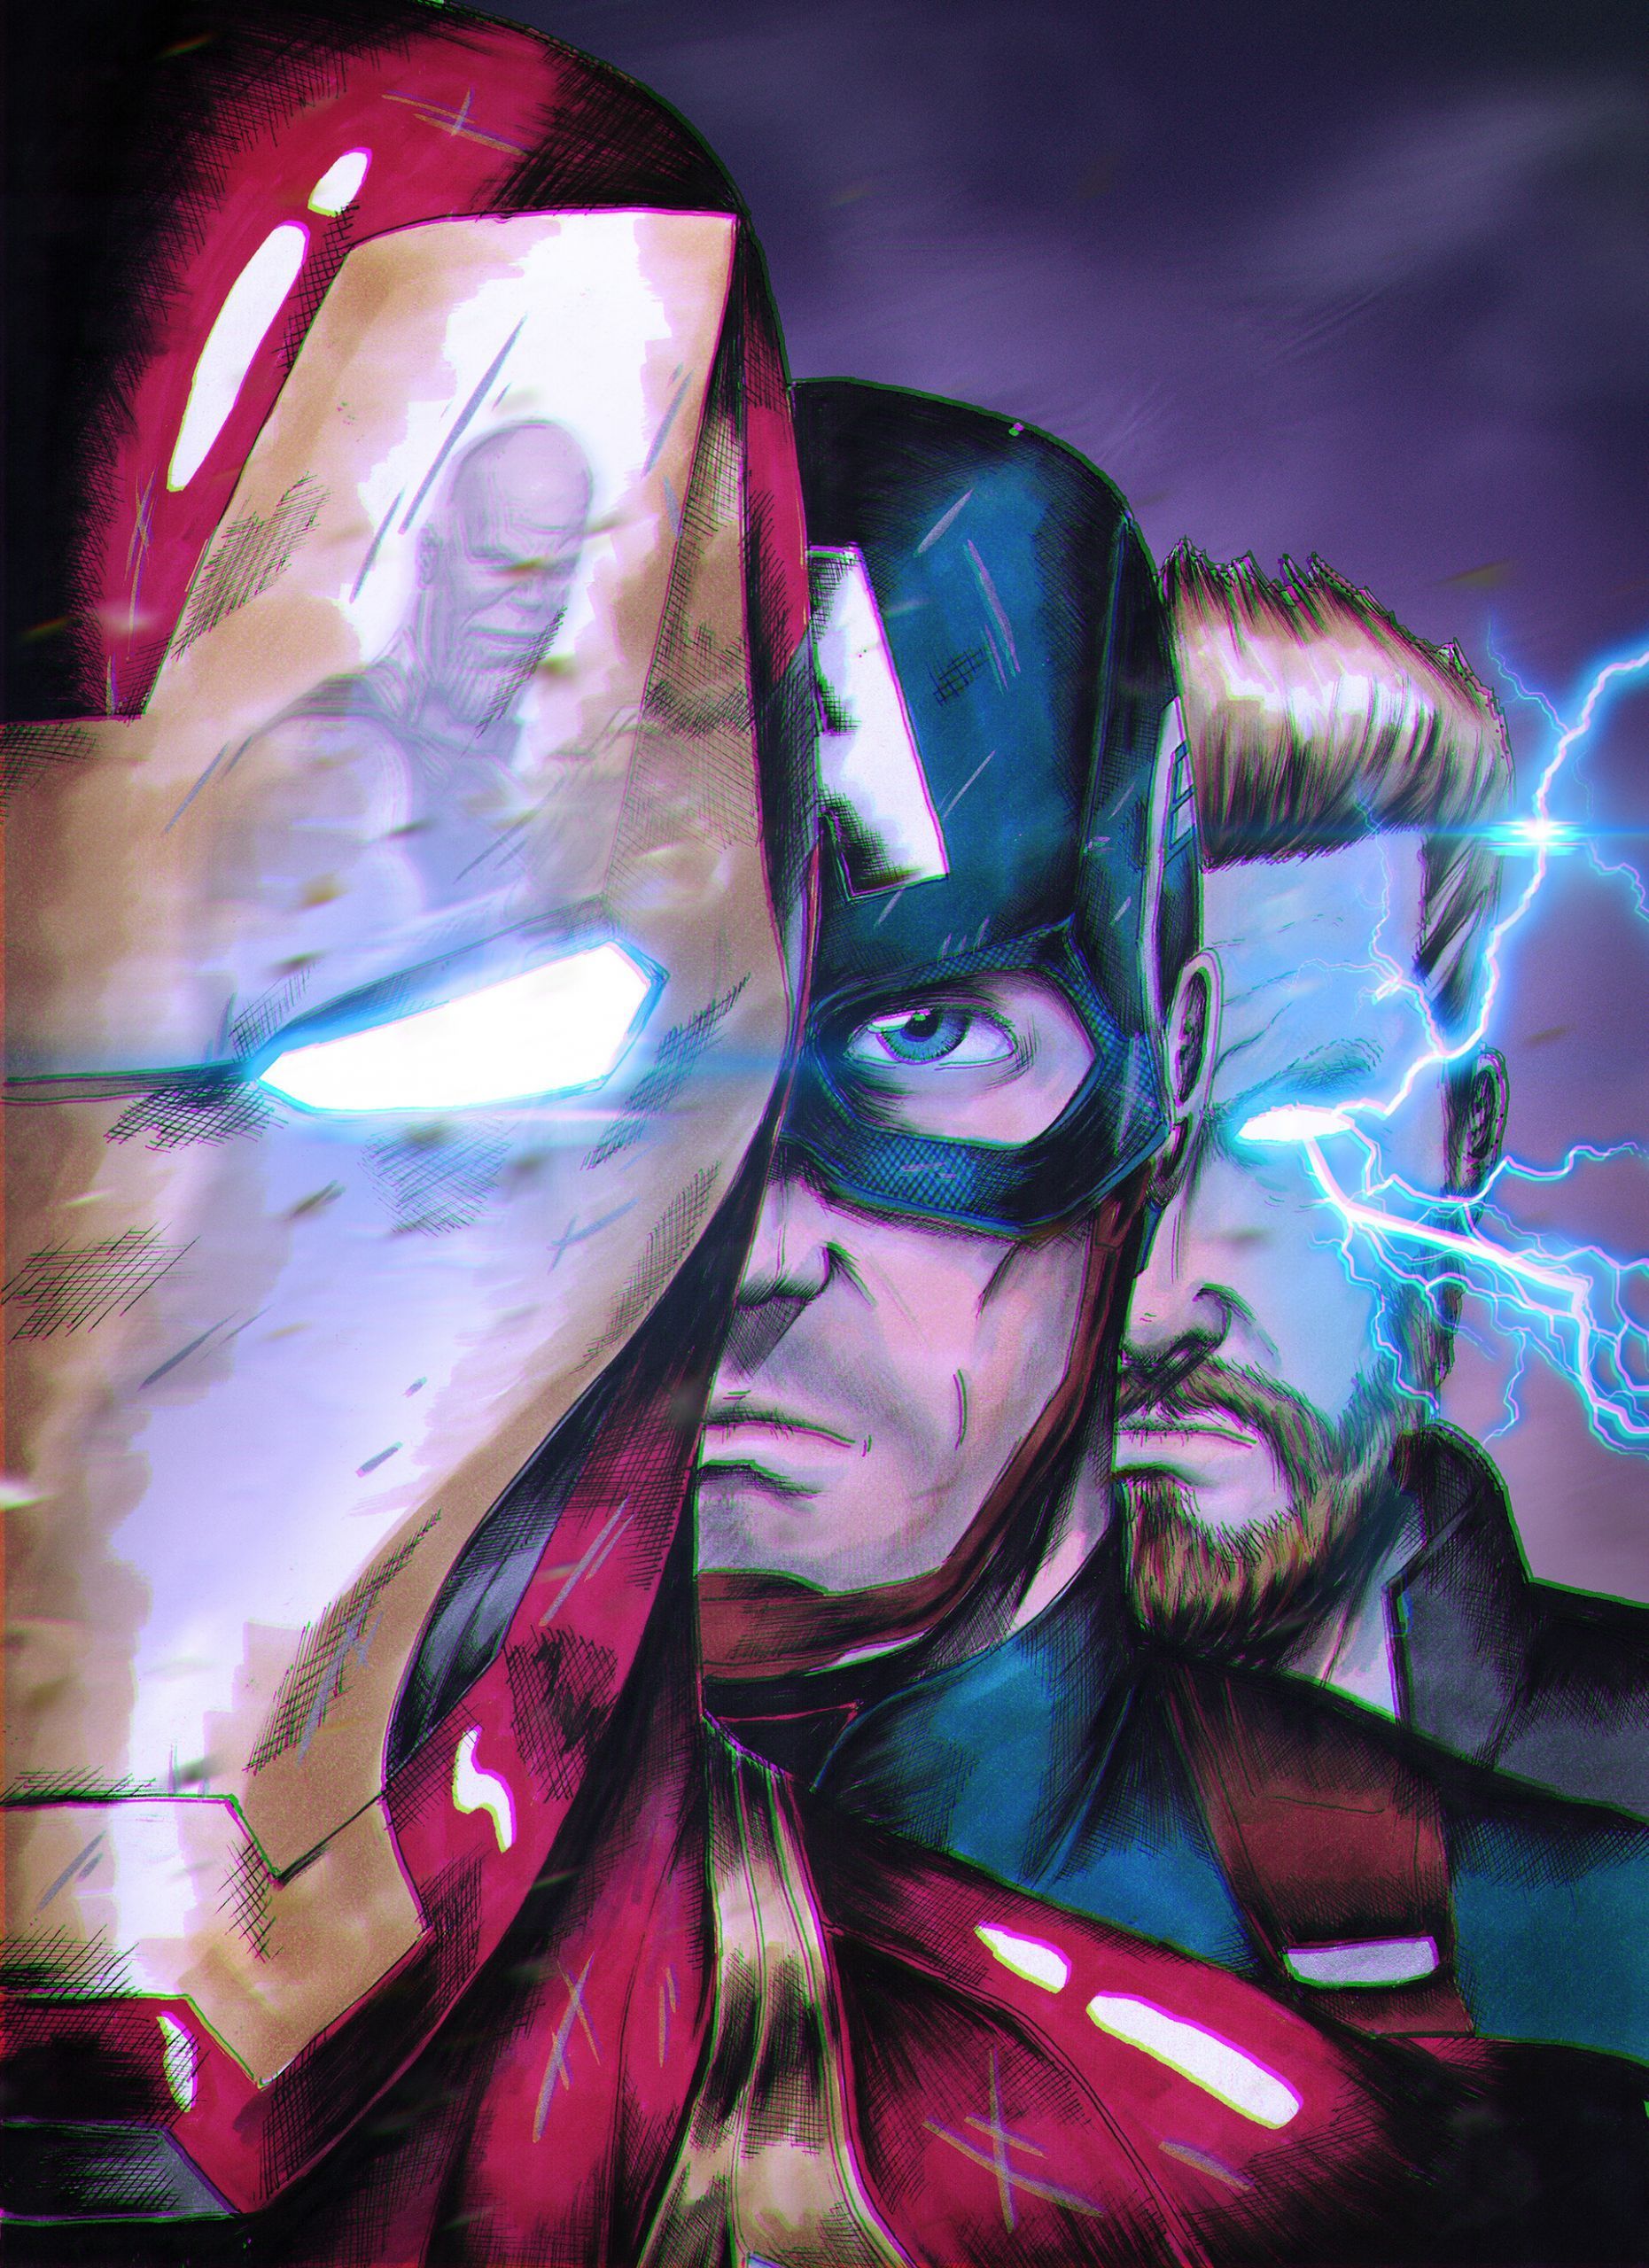 The Trinity Avengers Endgame Wallpapers